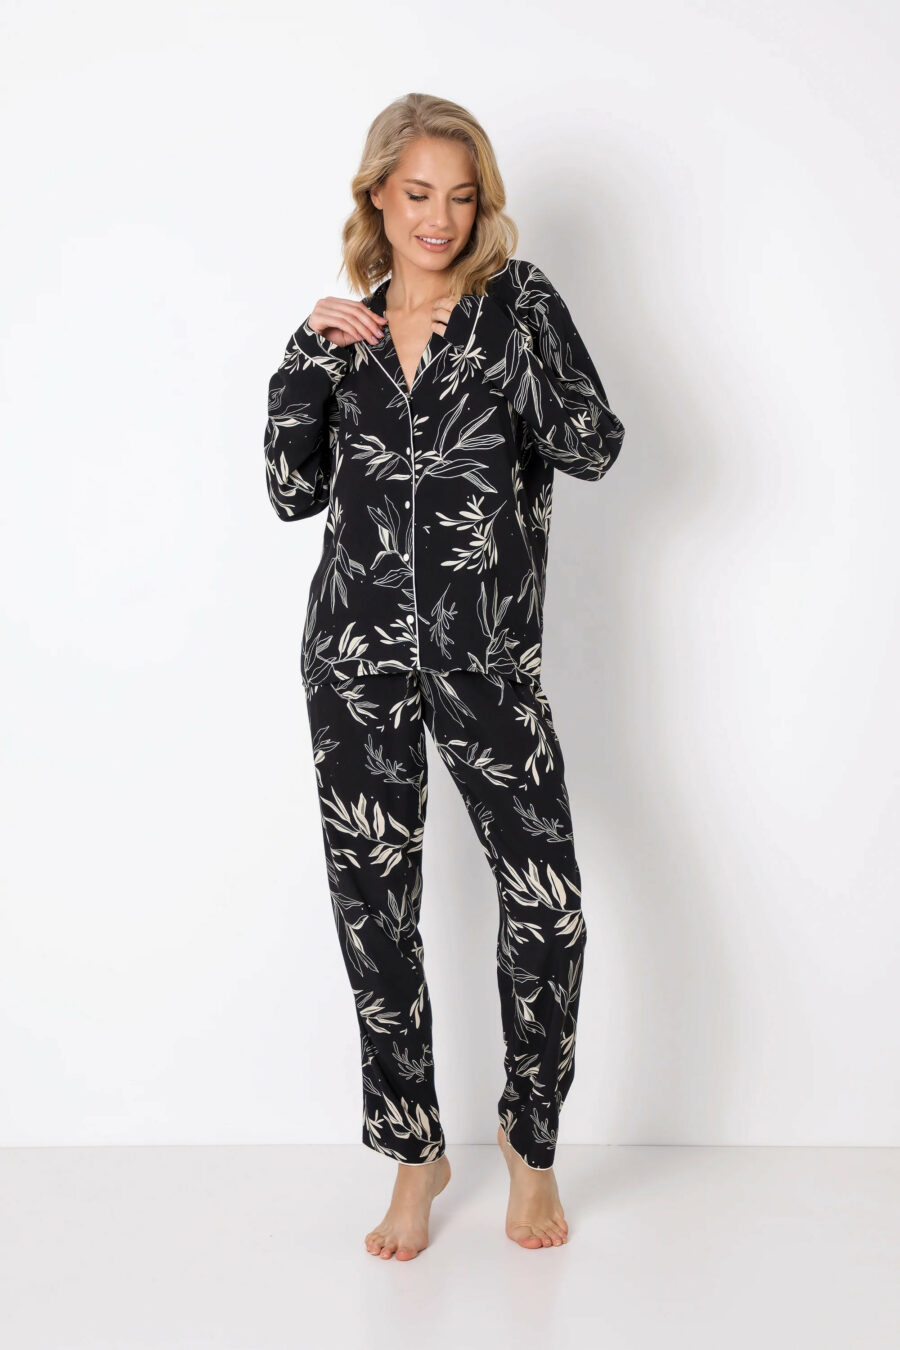 pijama-largo-satinado-estampado-de-aruelle-modelo-gabrielle-front1-celesteshops-burgos